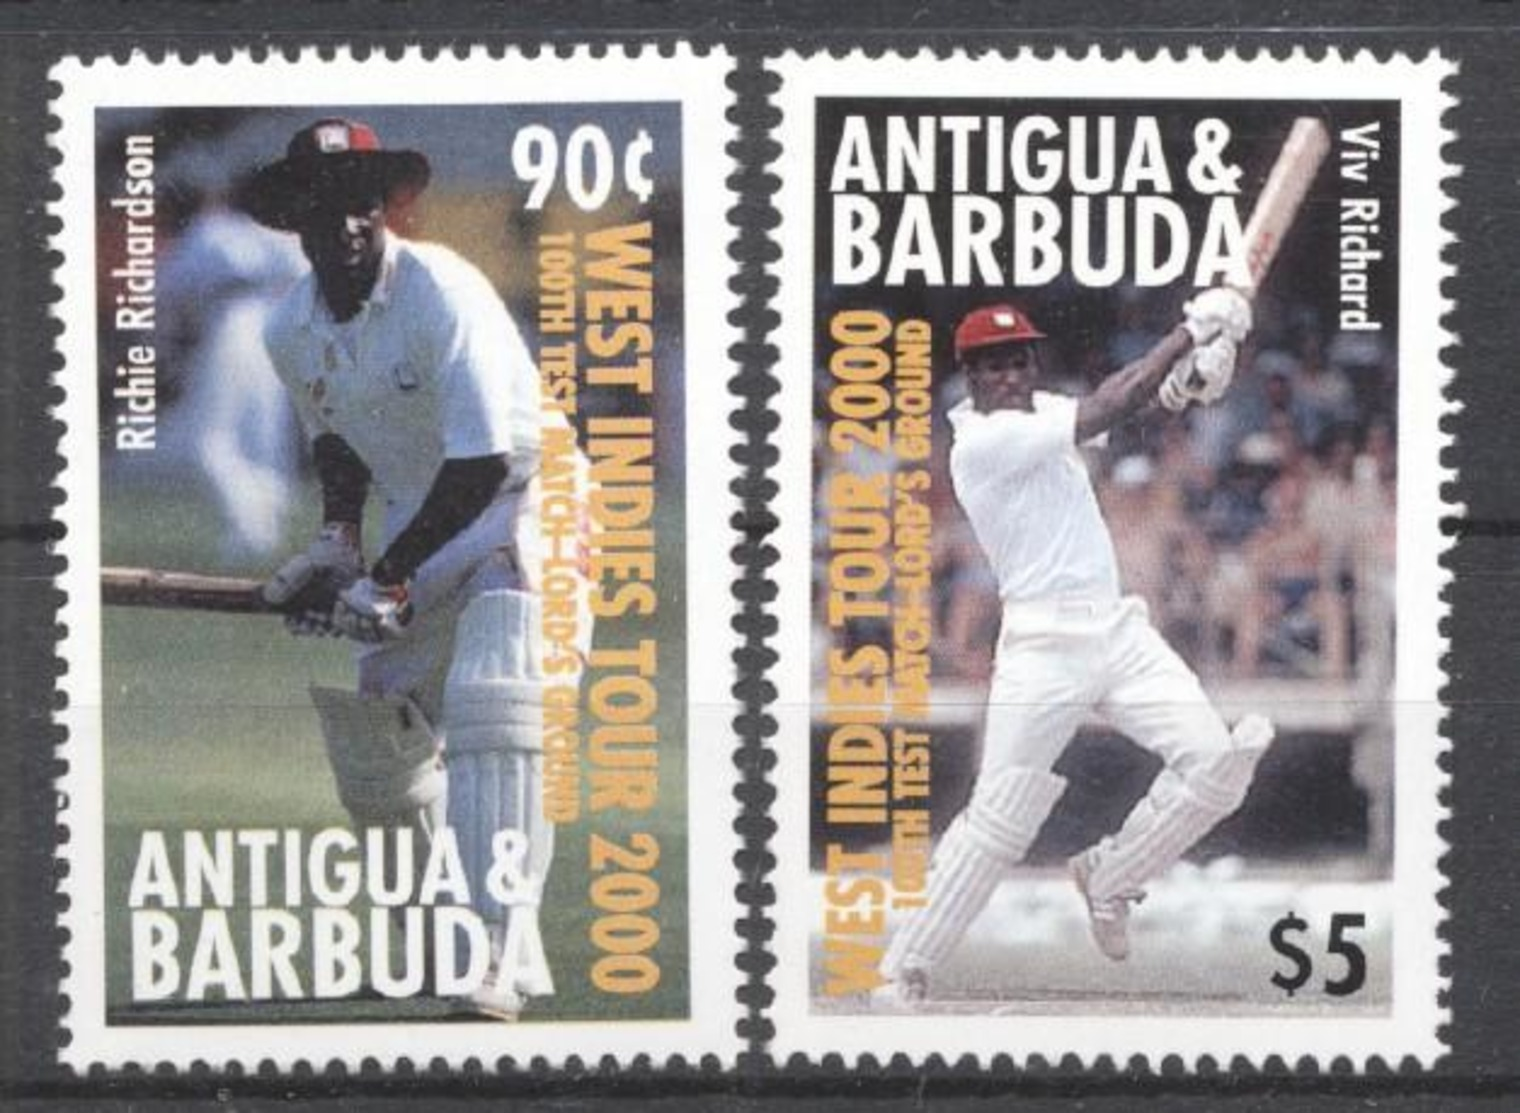 Antigua & Barbuda 2000 - MNH - Cricket (255536) - Cricket